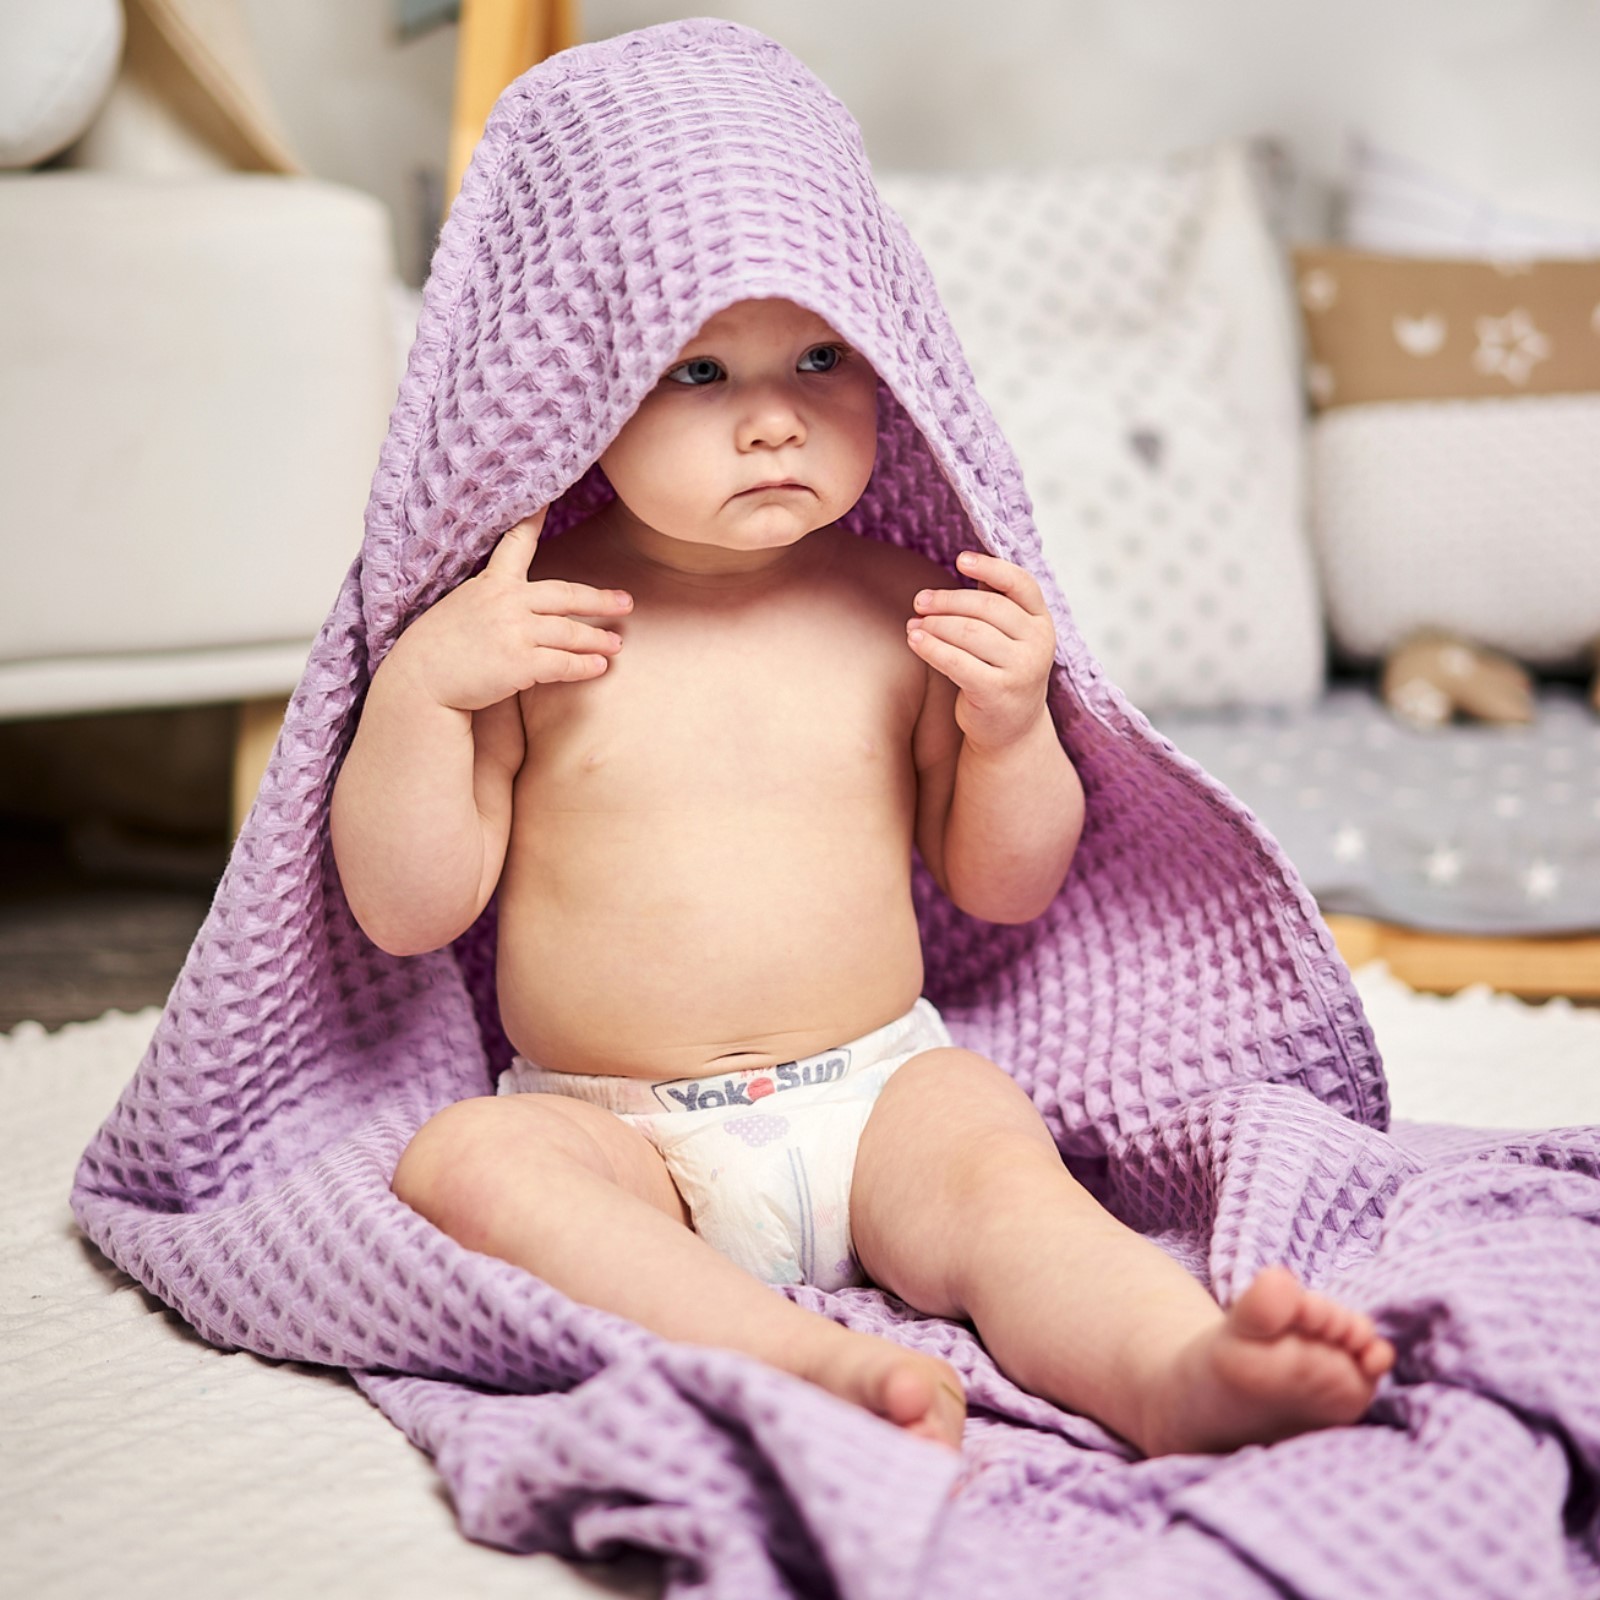 Детское полотенце Boho цвет: сиреневый (120х120 см), размер 120х120 см ros910612 Детское полотенце Boho цвет: сиреневый (120х120 см) - фото 1